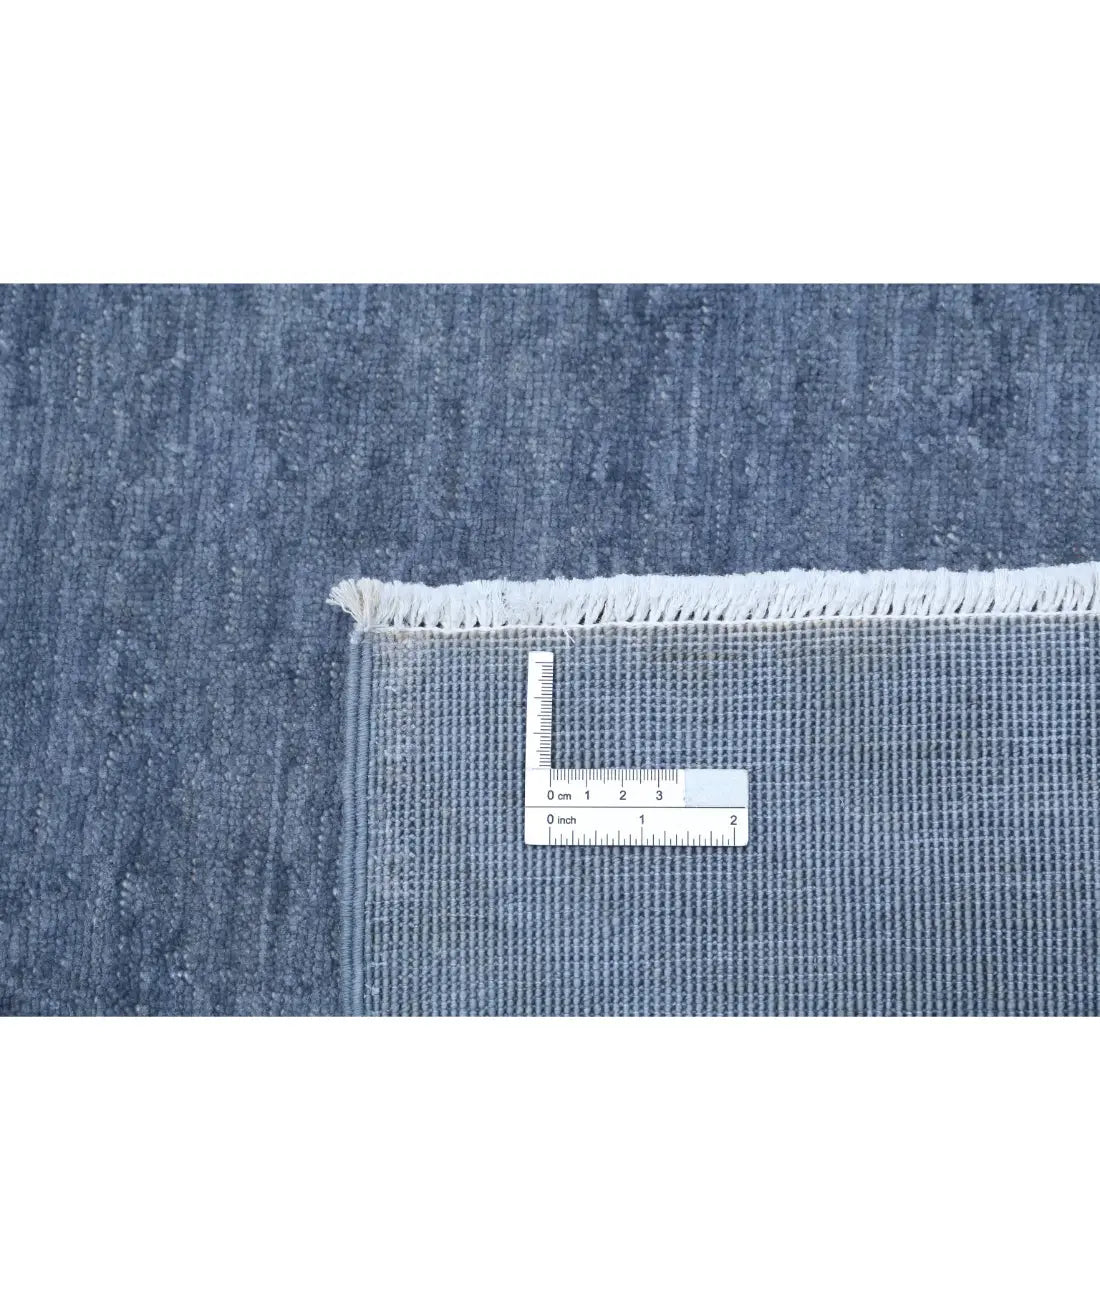 Hand Knotted Overdye Wool Rug - 8'6'' x 11'8'' - Arteverk Rugs Area rug